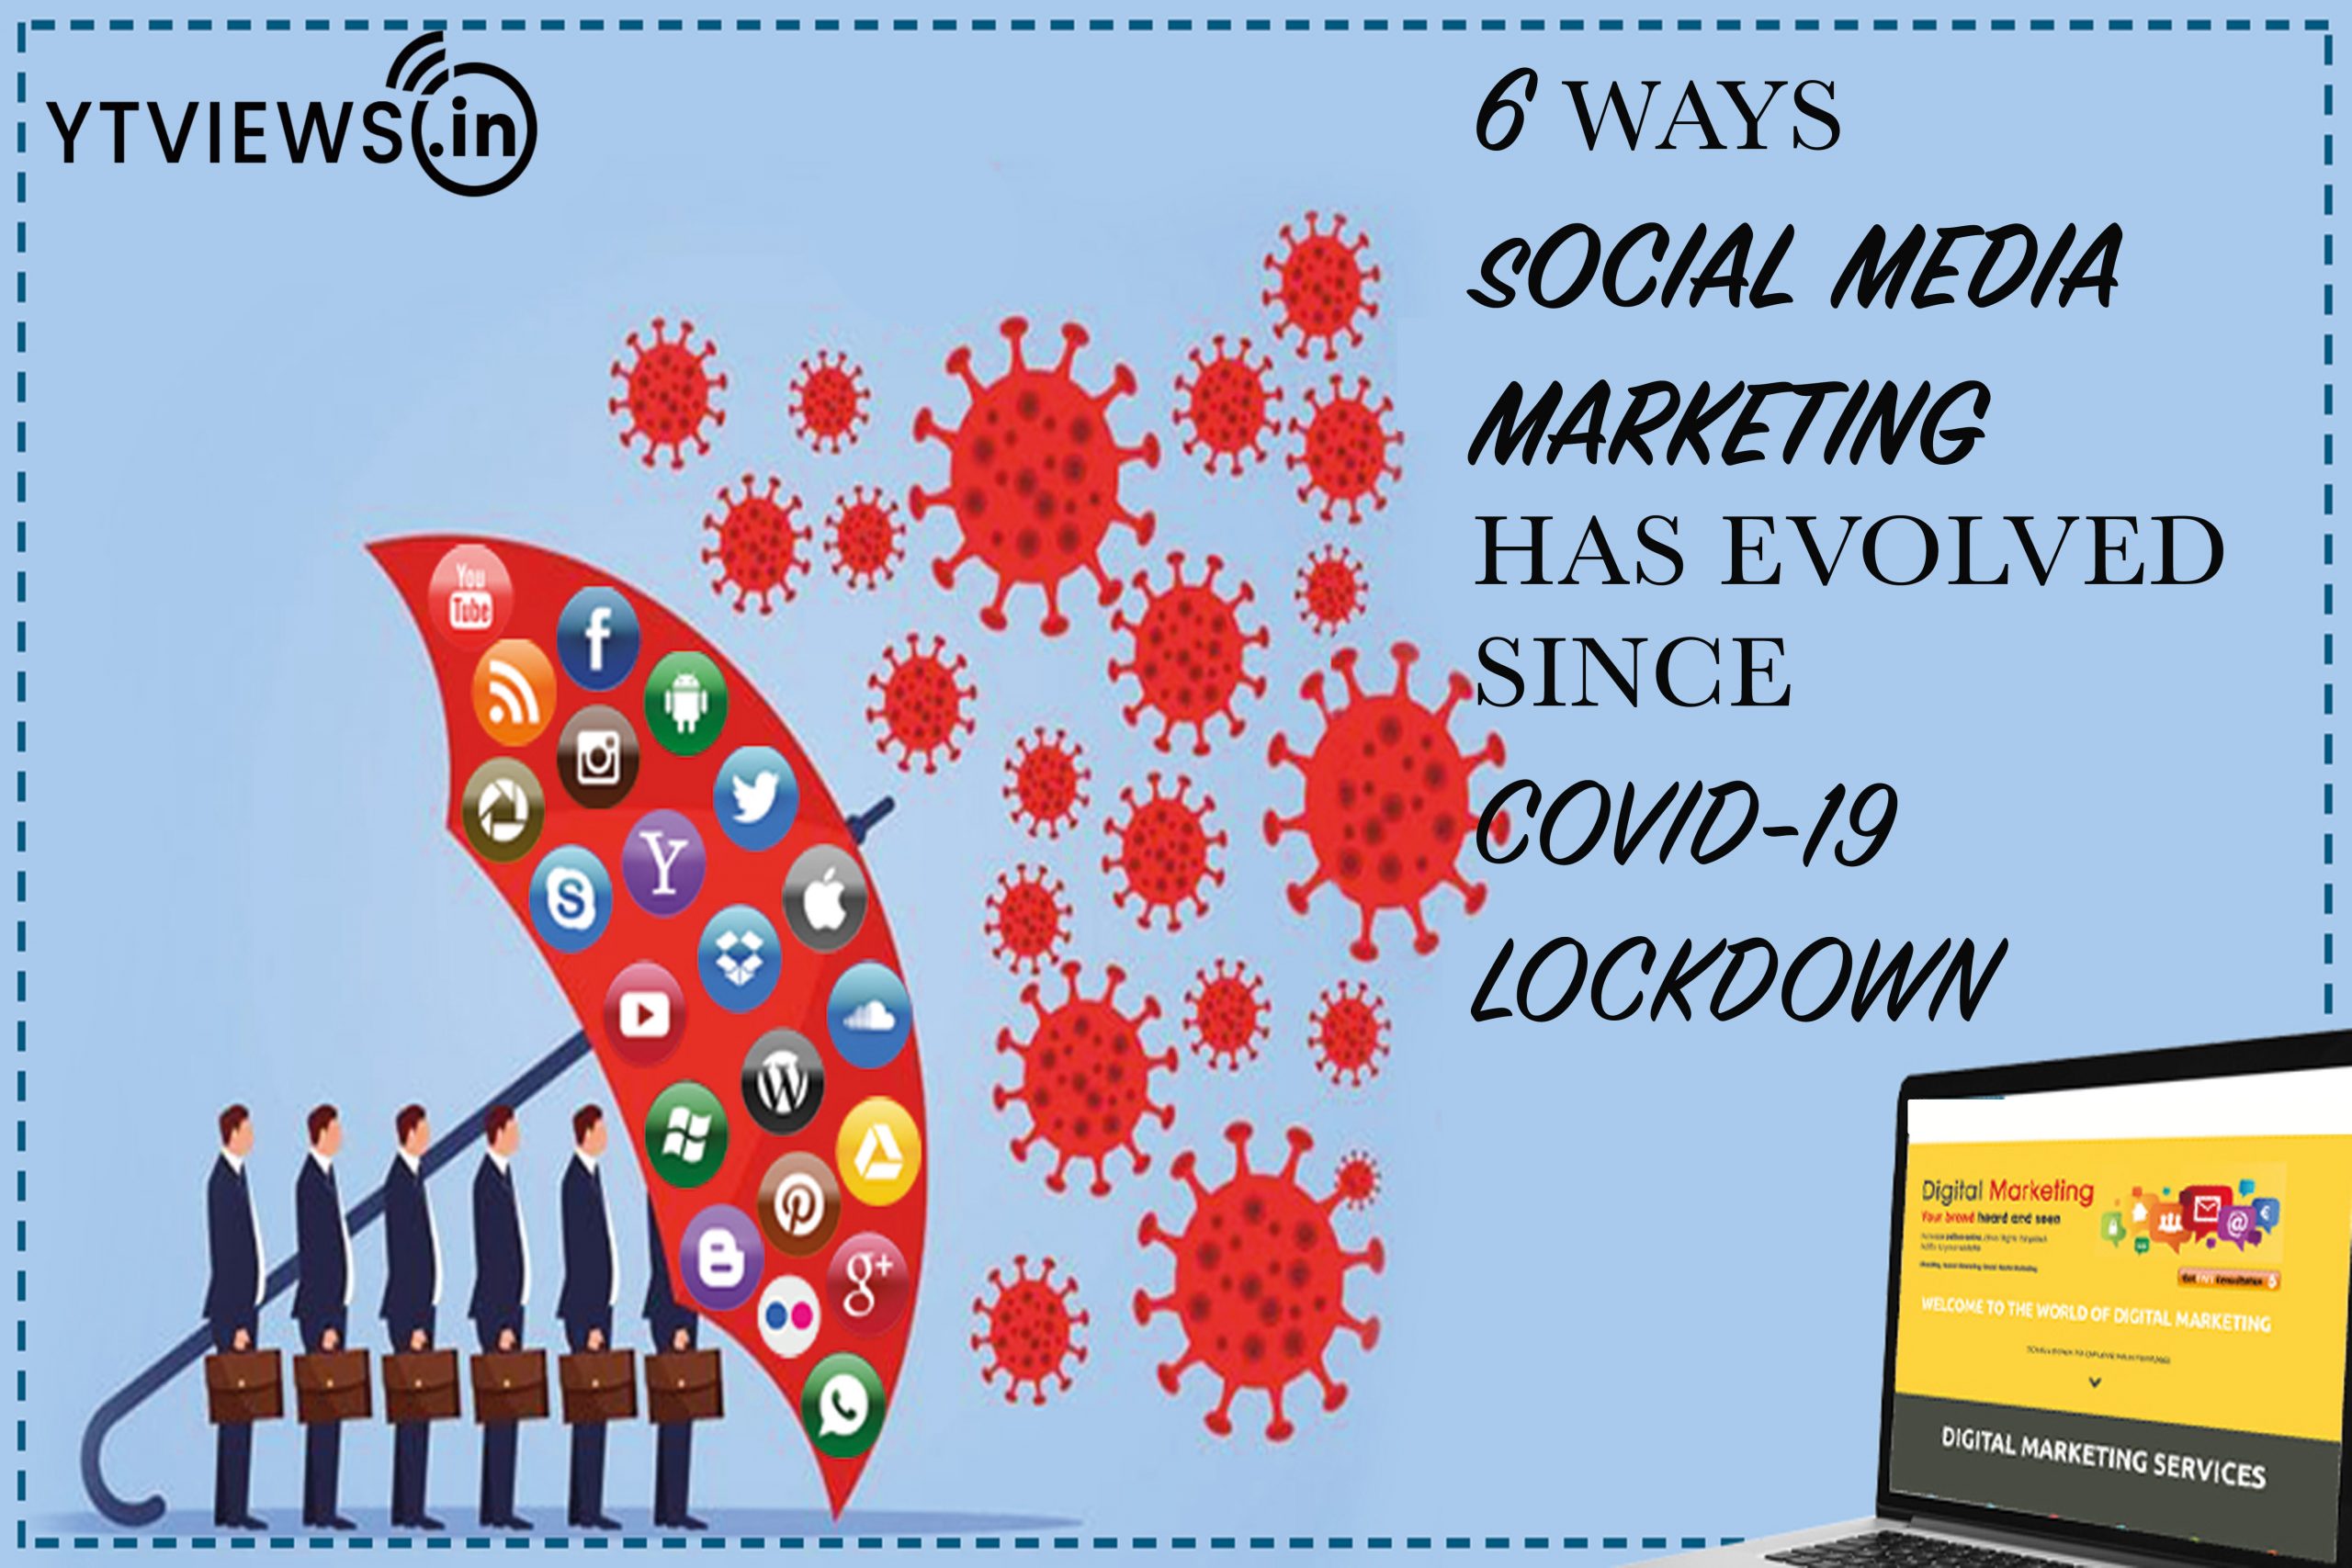 6 ways social media marketing has evolved since COVID-19 lockdown